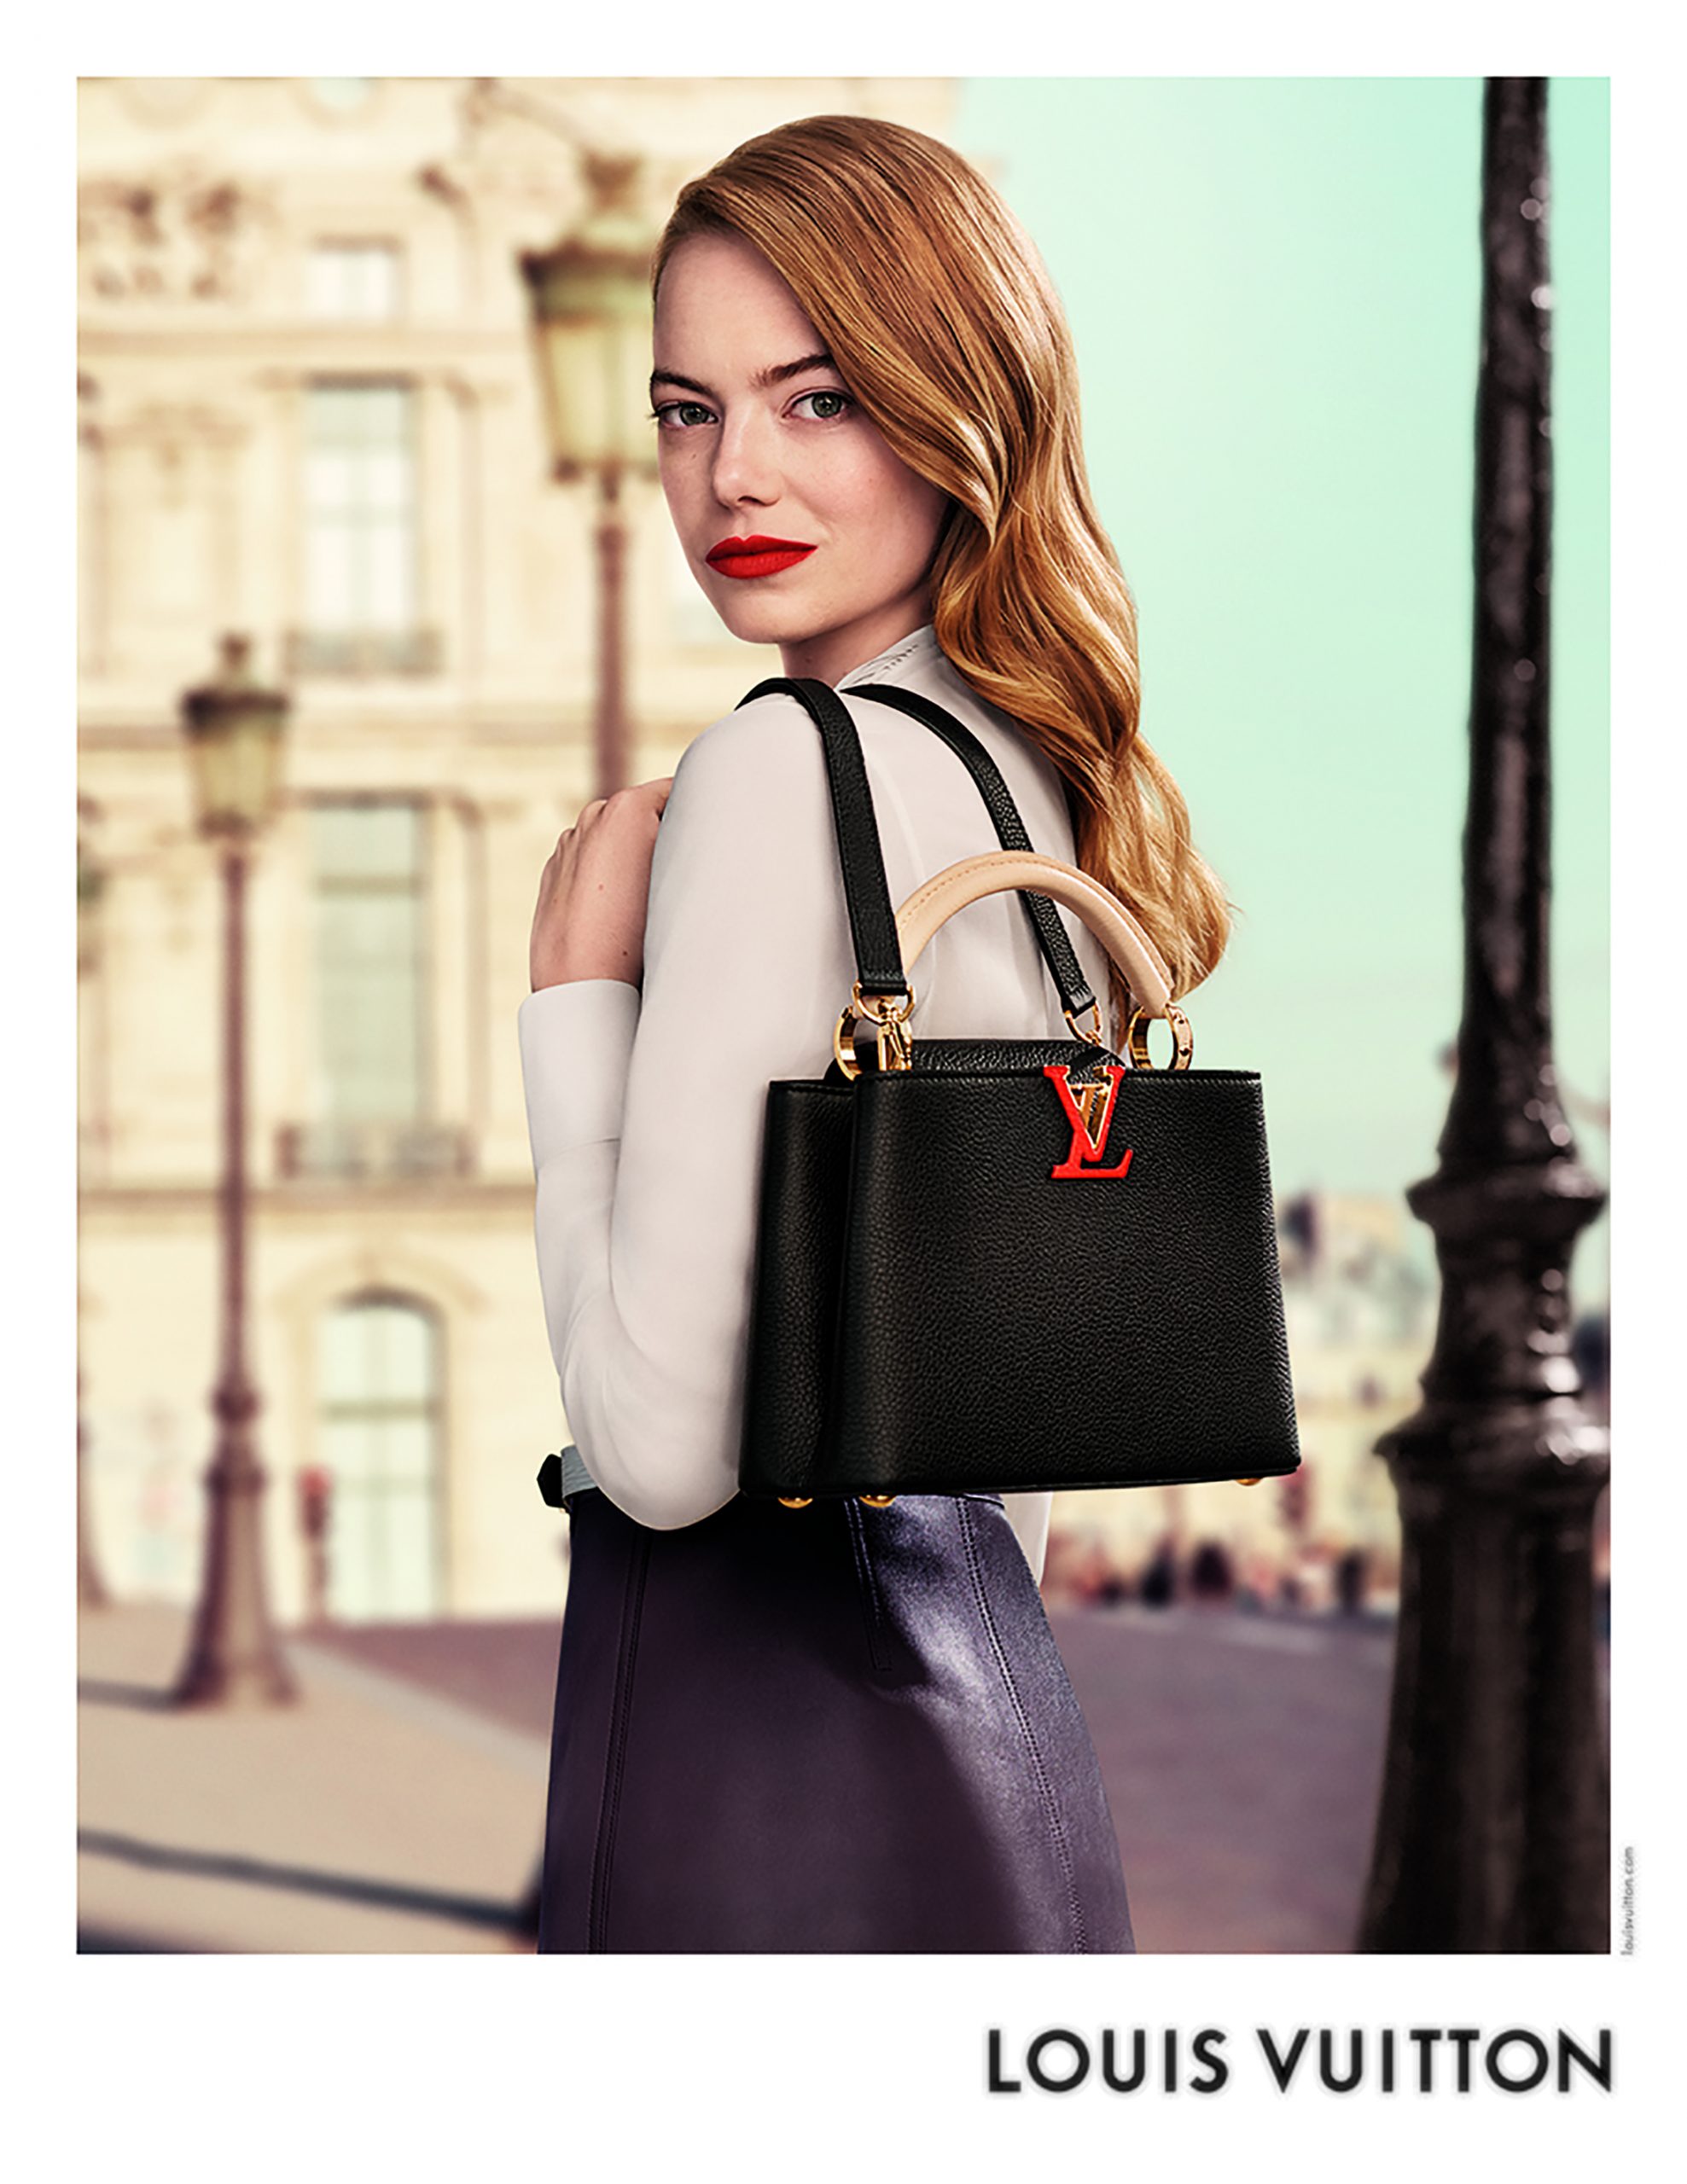 Kaia Gerber Louis Vuitton Twist Spring 2020 Campaign